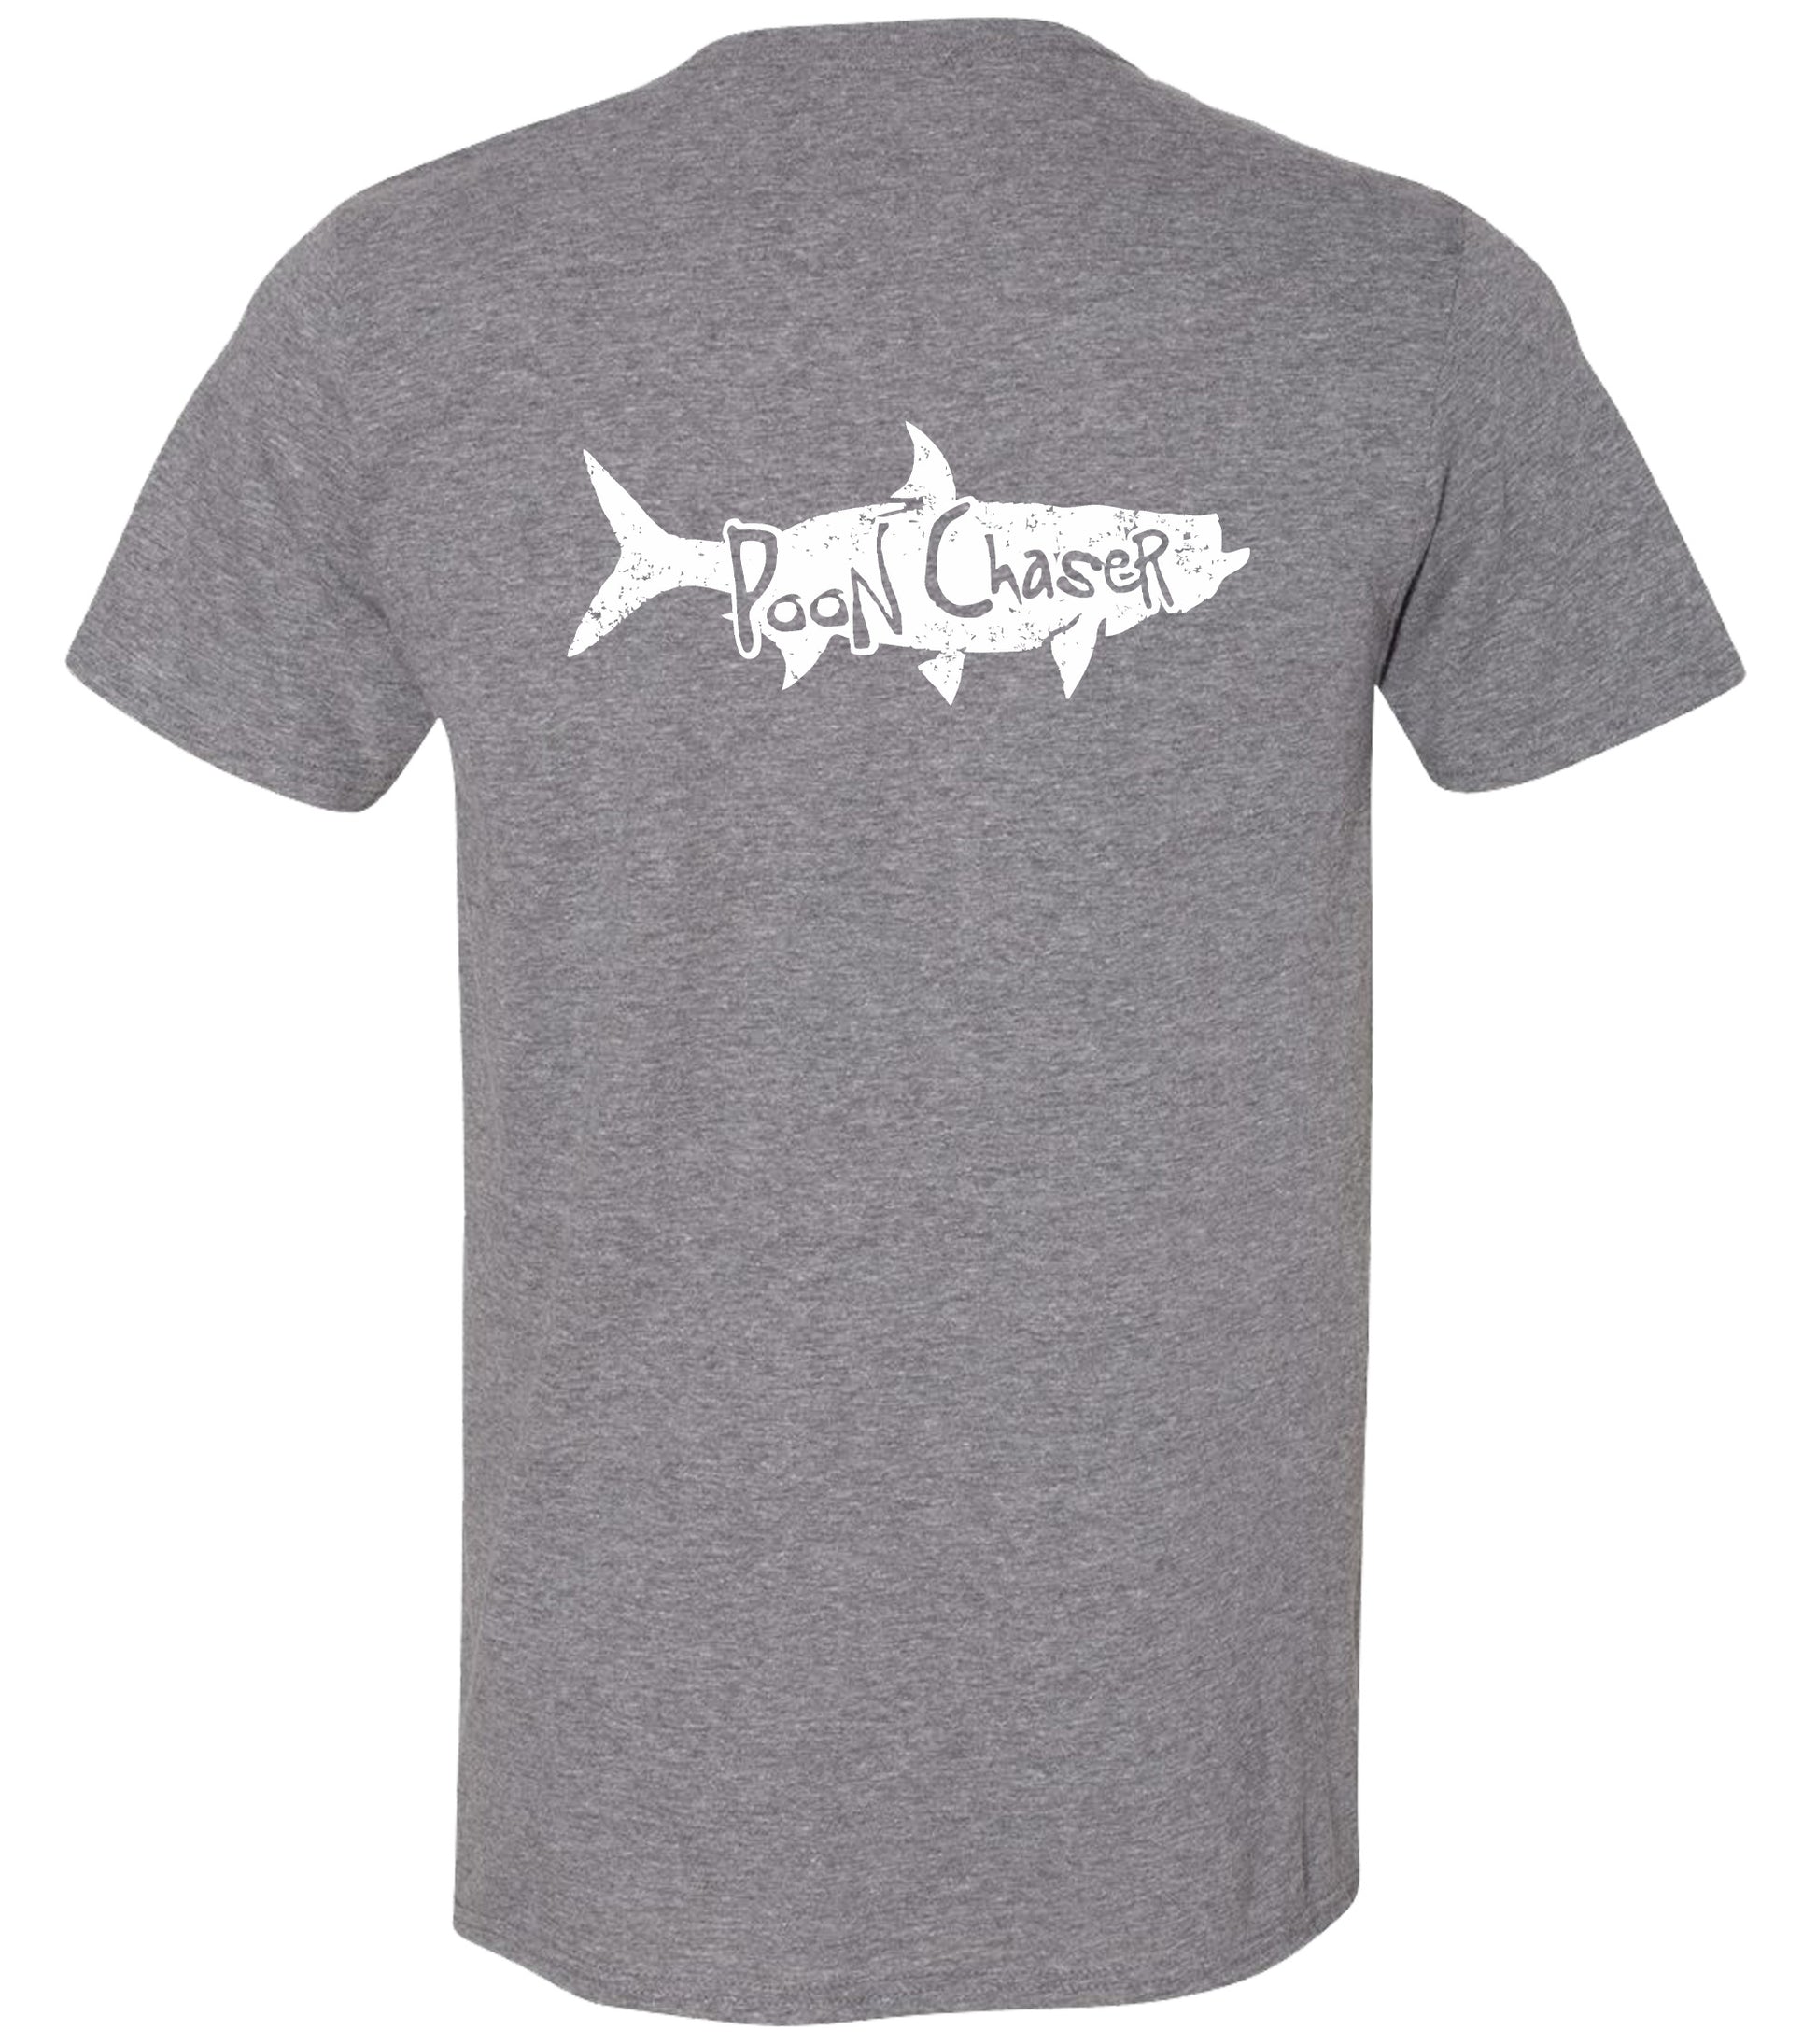 Tarpon "Poon Chaser" Reel Fishy t-shirt - Hthr Charcoal w/White logo